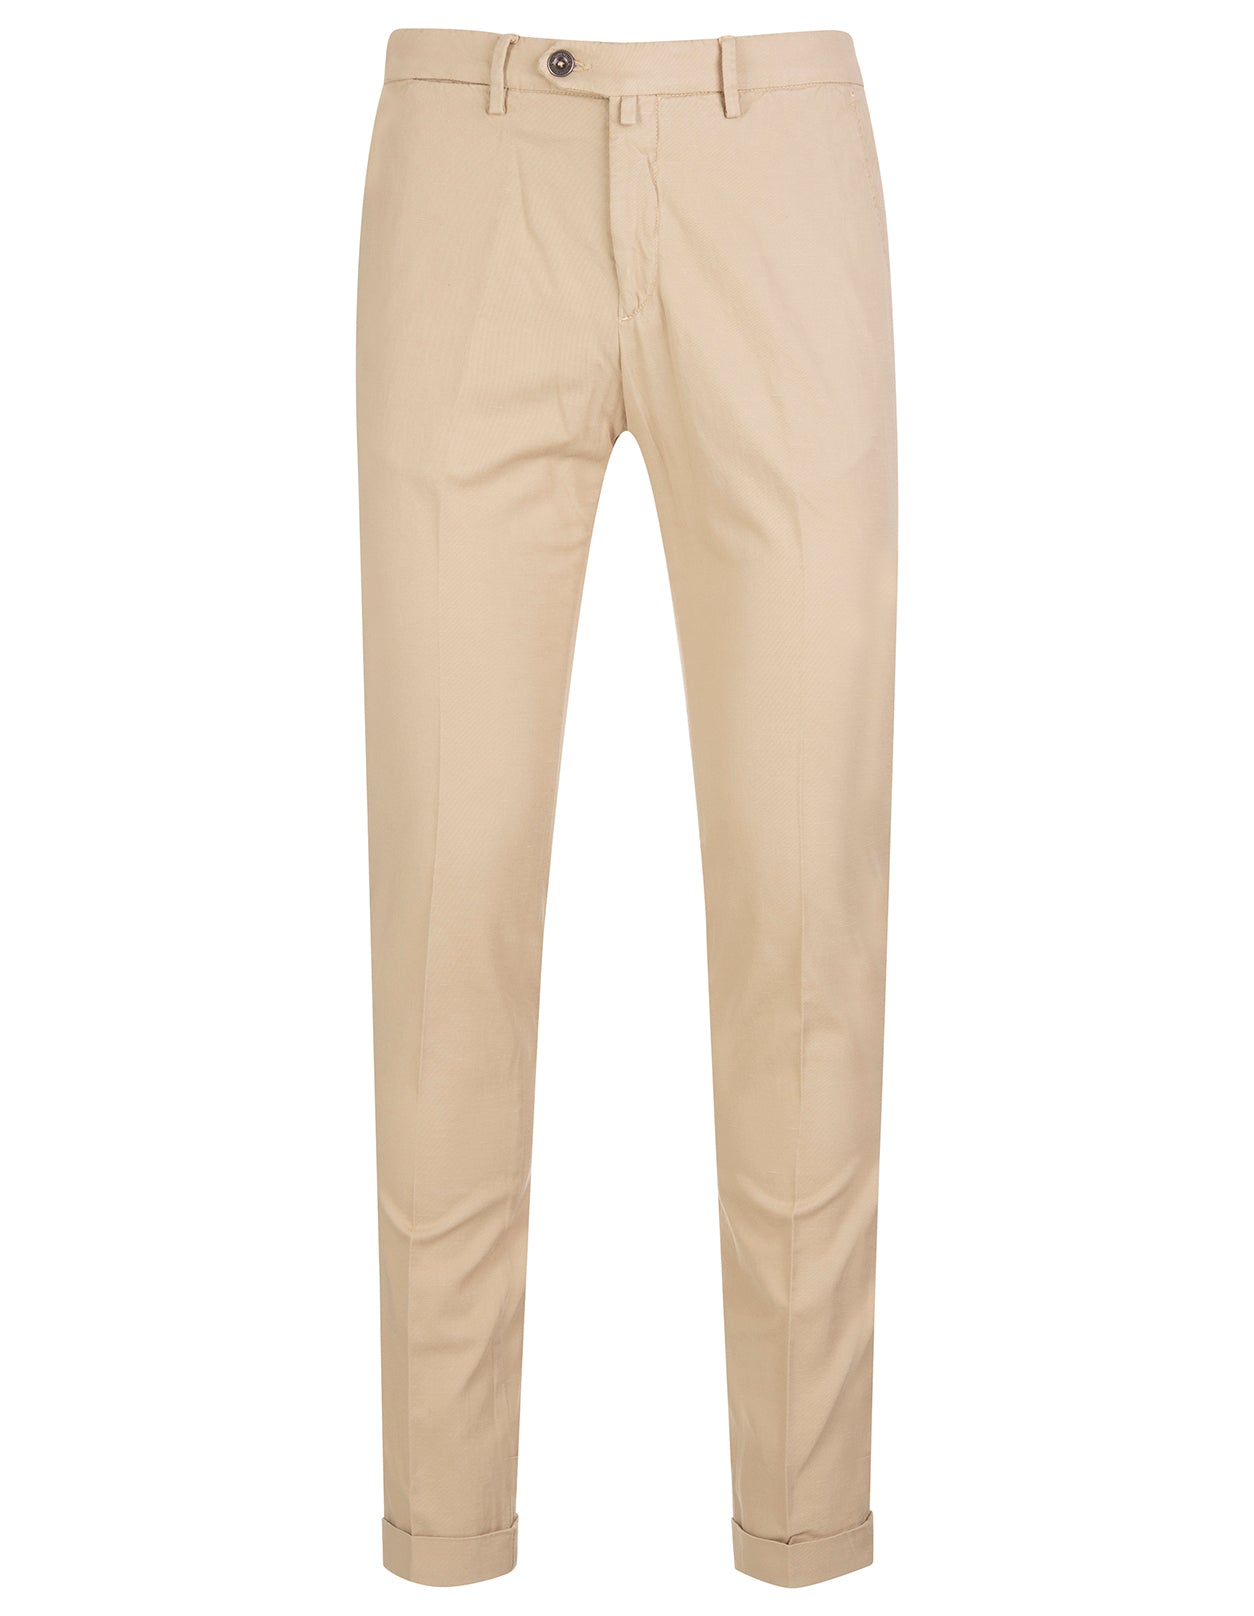 Pantalone Slim Fit BSettecento / Beige - Ideal Moda